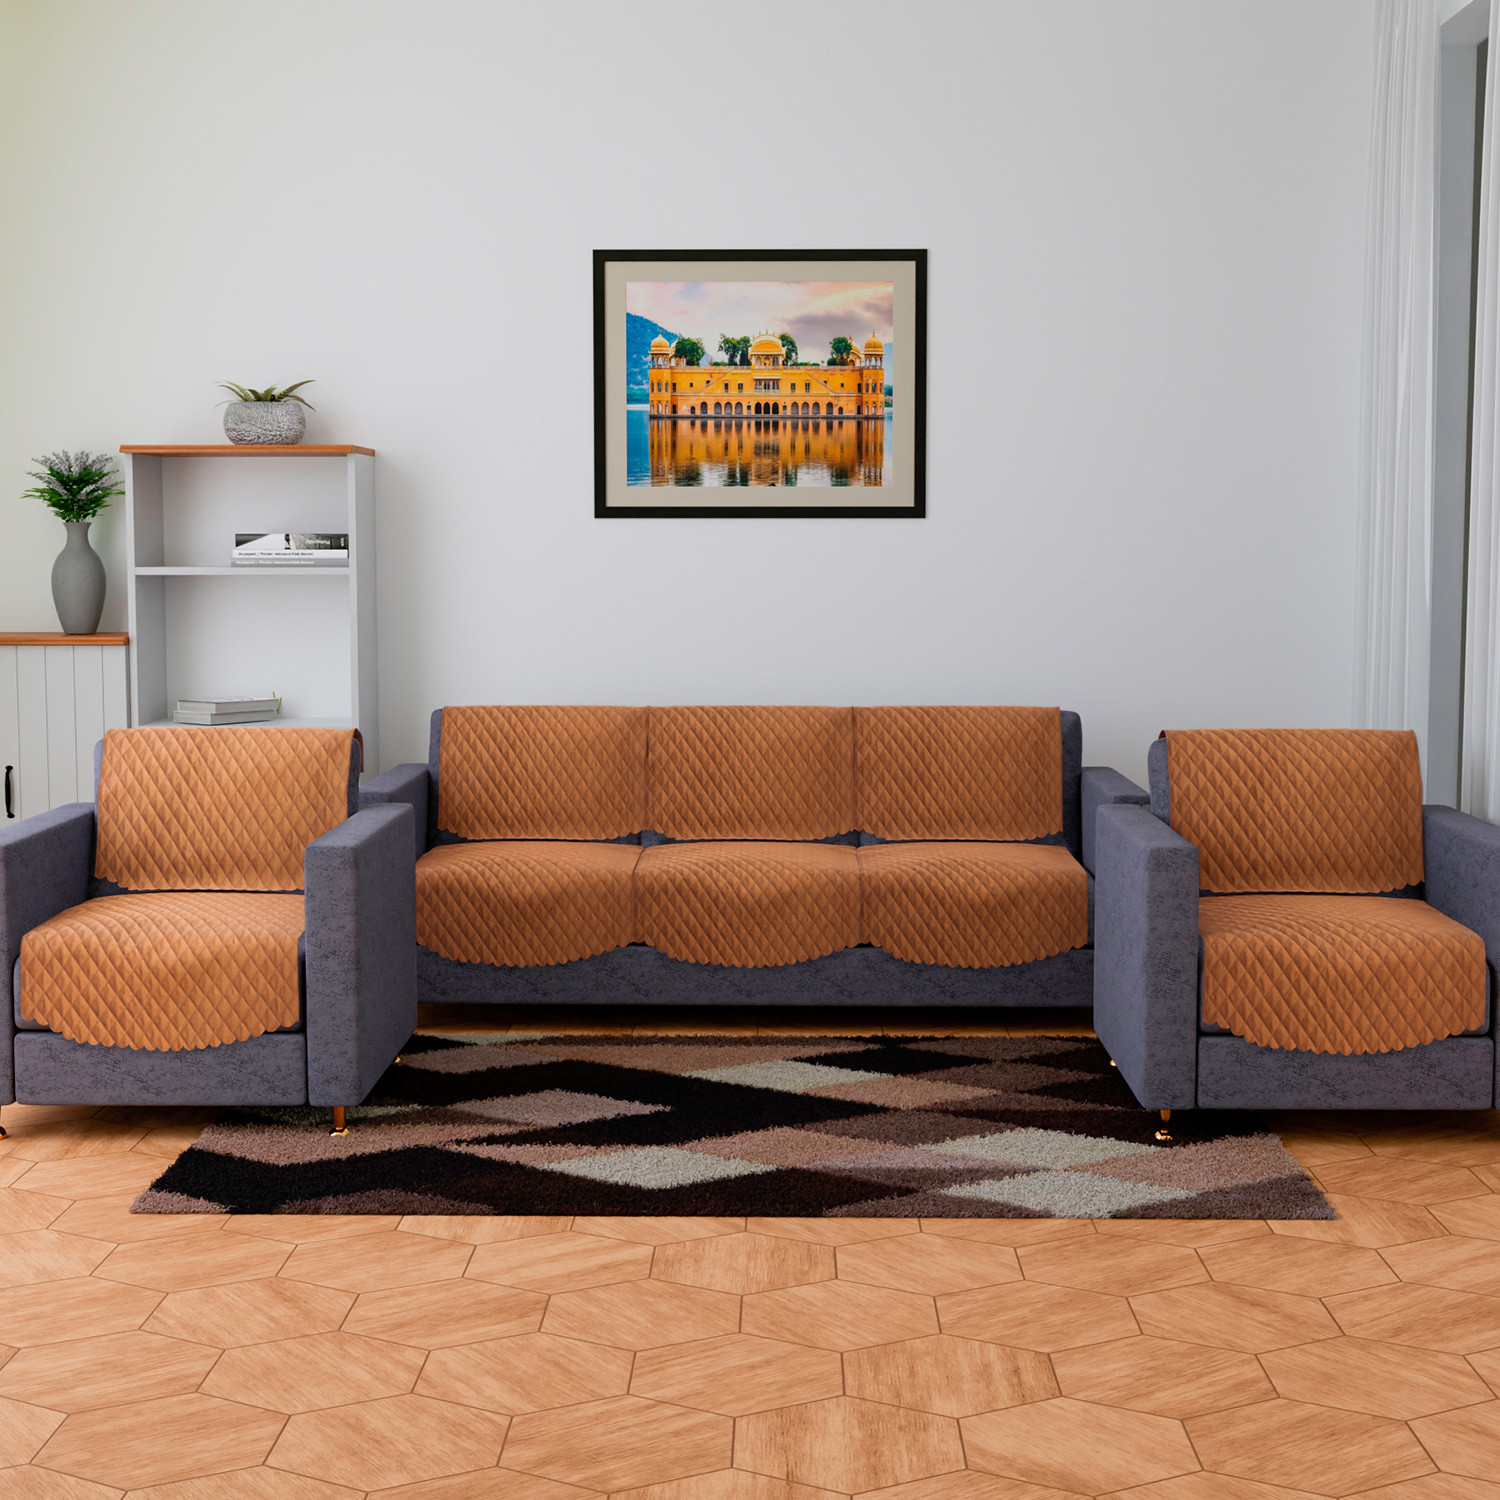 Kuber Industries Sofa Cover Set | Sofa Slip Cover Set | Modern Quilted Sofa Cover | Velvet 5 Seater Couch Cover | Sofa Slipcover Set | Sofa Cover for Living Room | Brown